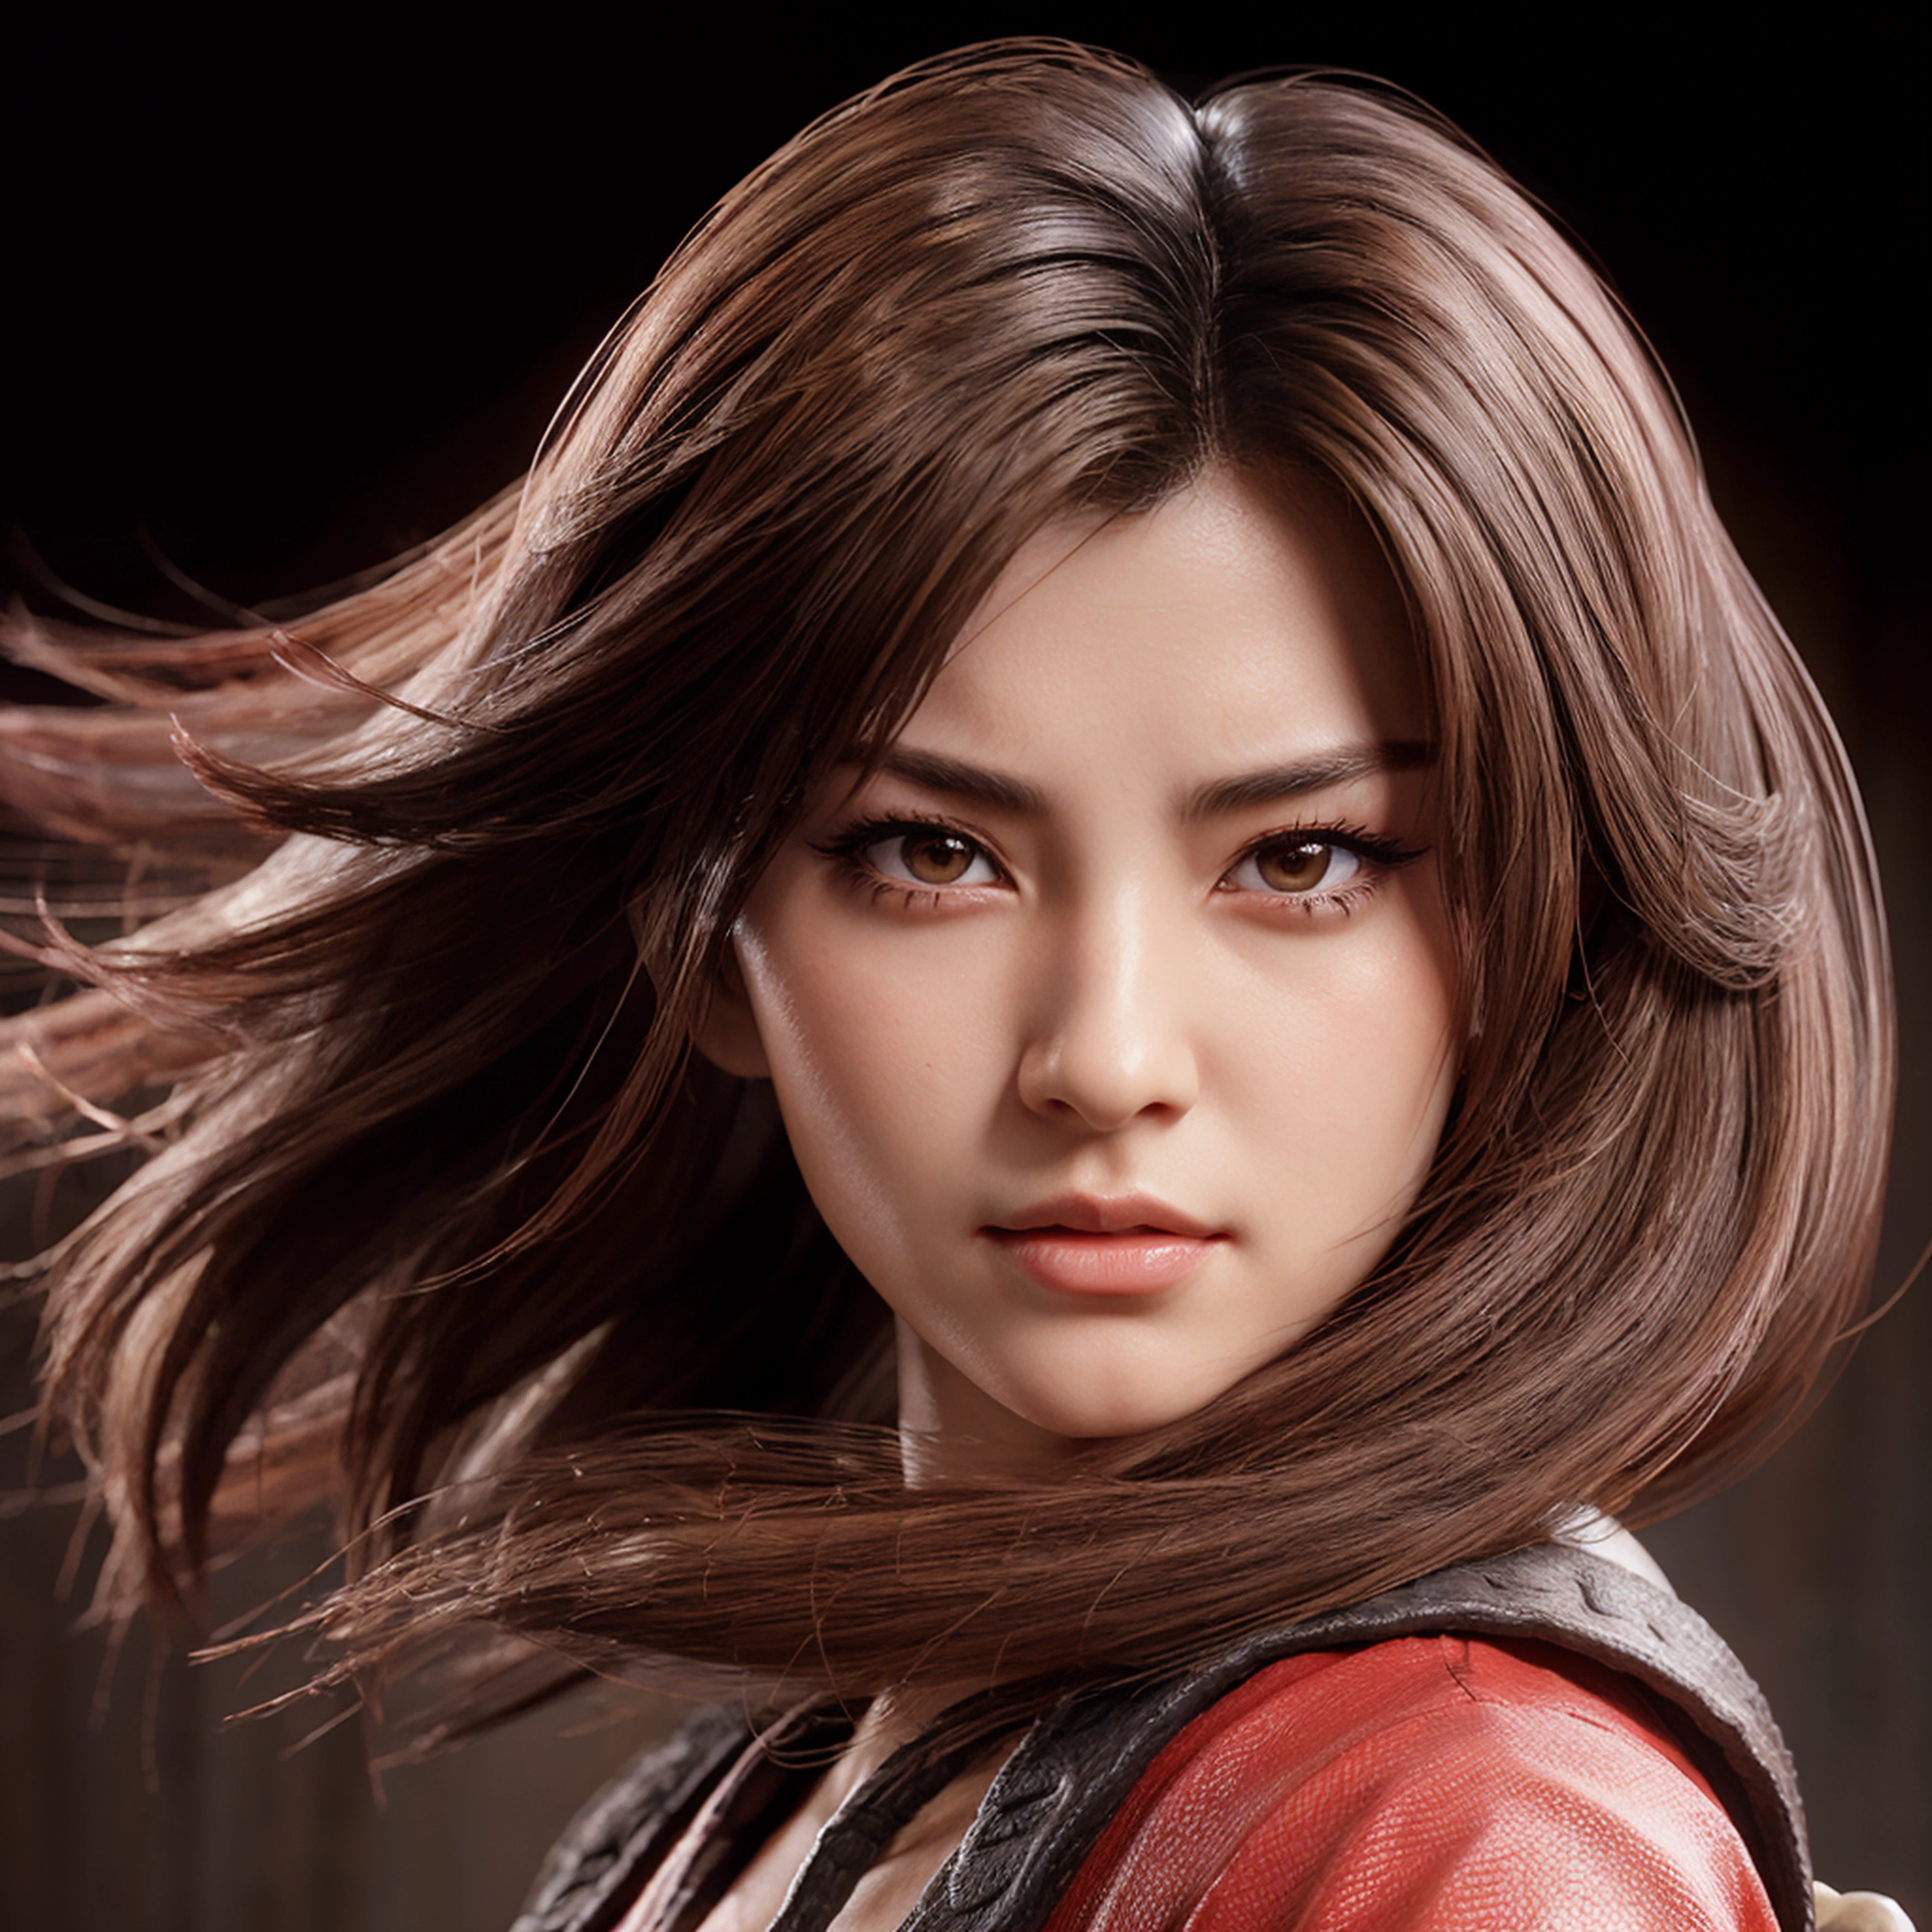 Mai Shiranui, 精致的面容, lightbrown eyes, oriental makeup, Angry expression, texture ultra realistic